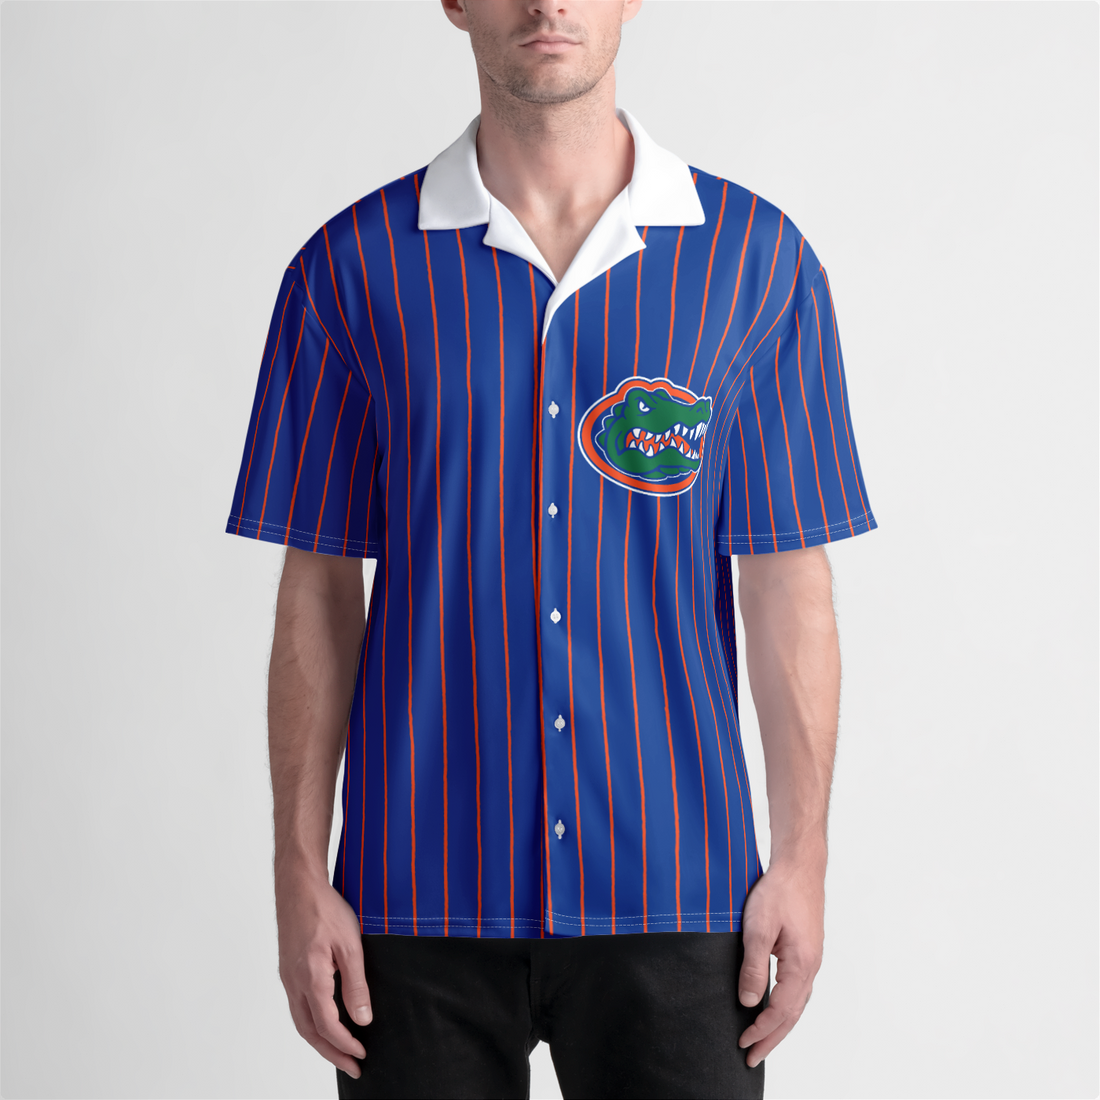 Florida Beach Shirt